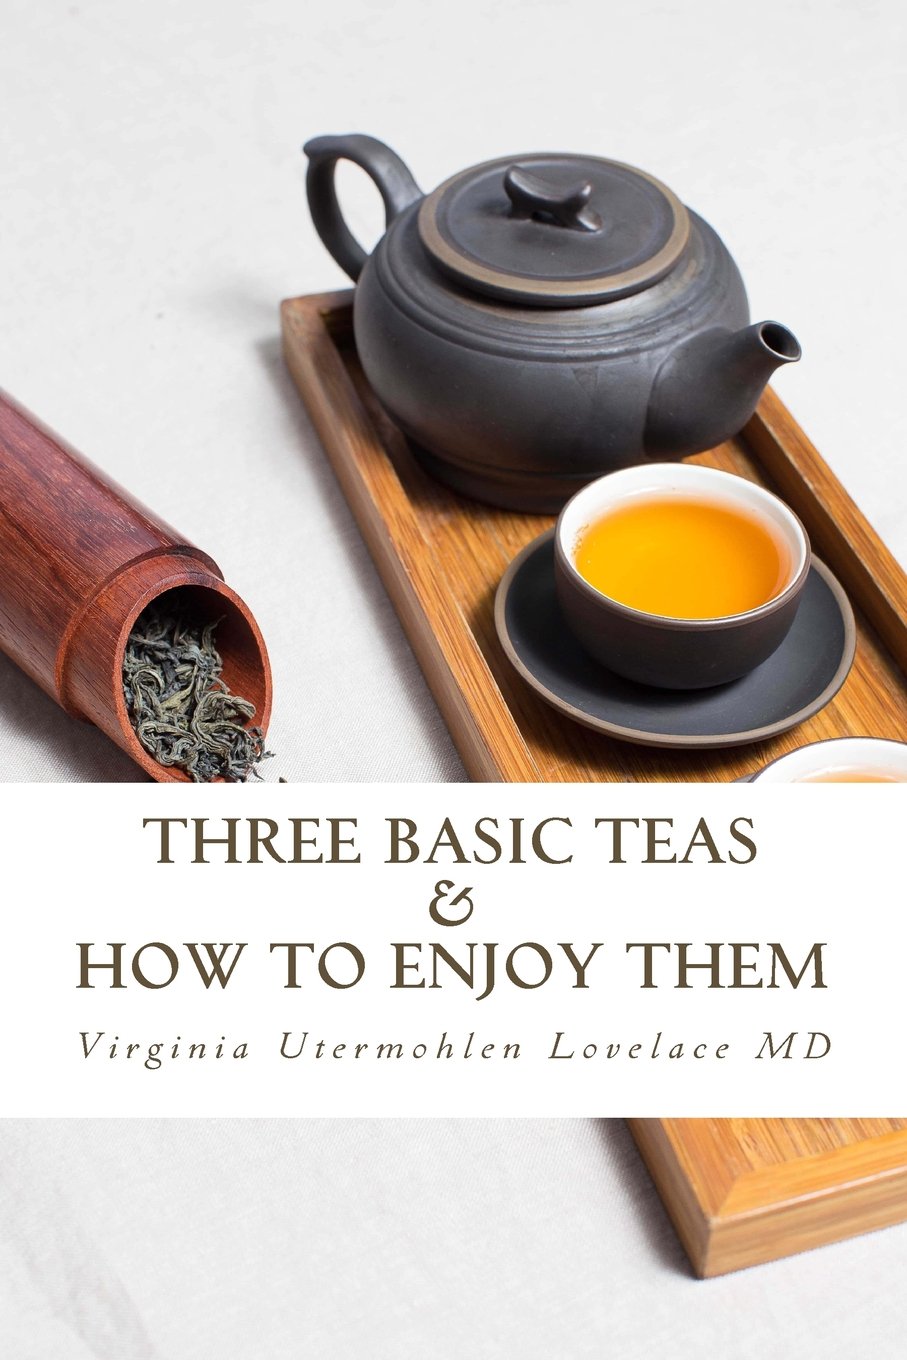 Three Basic Teas and How to Enjoy Them by Virginia Utermohlen Lovelace MD